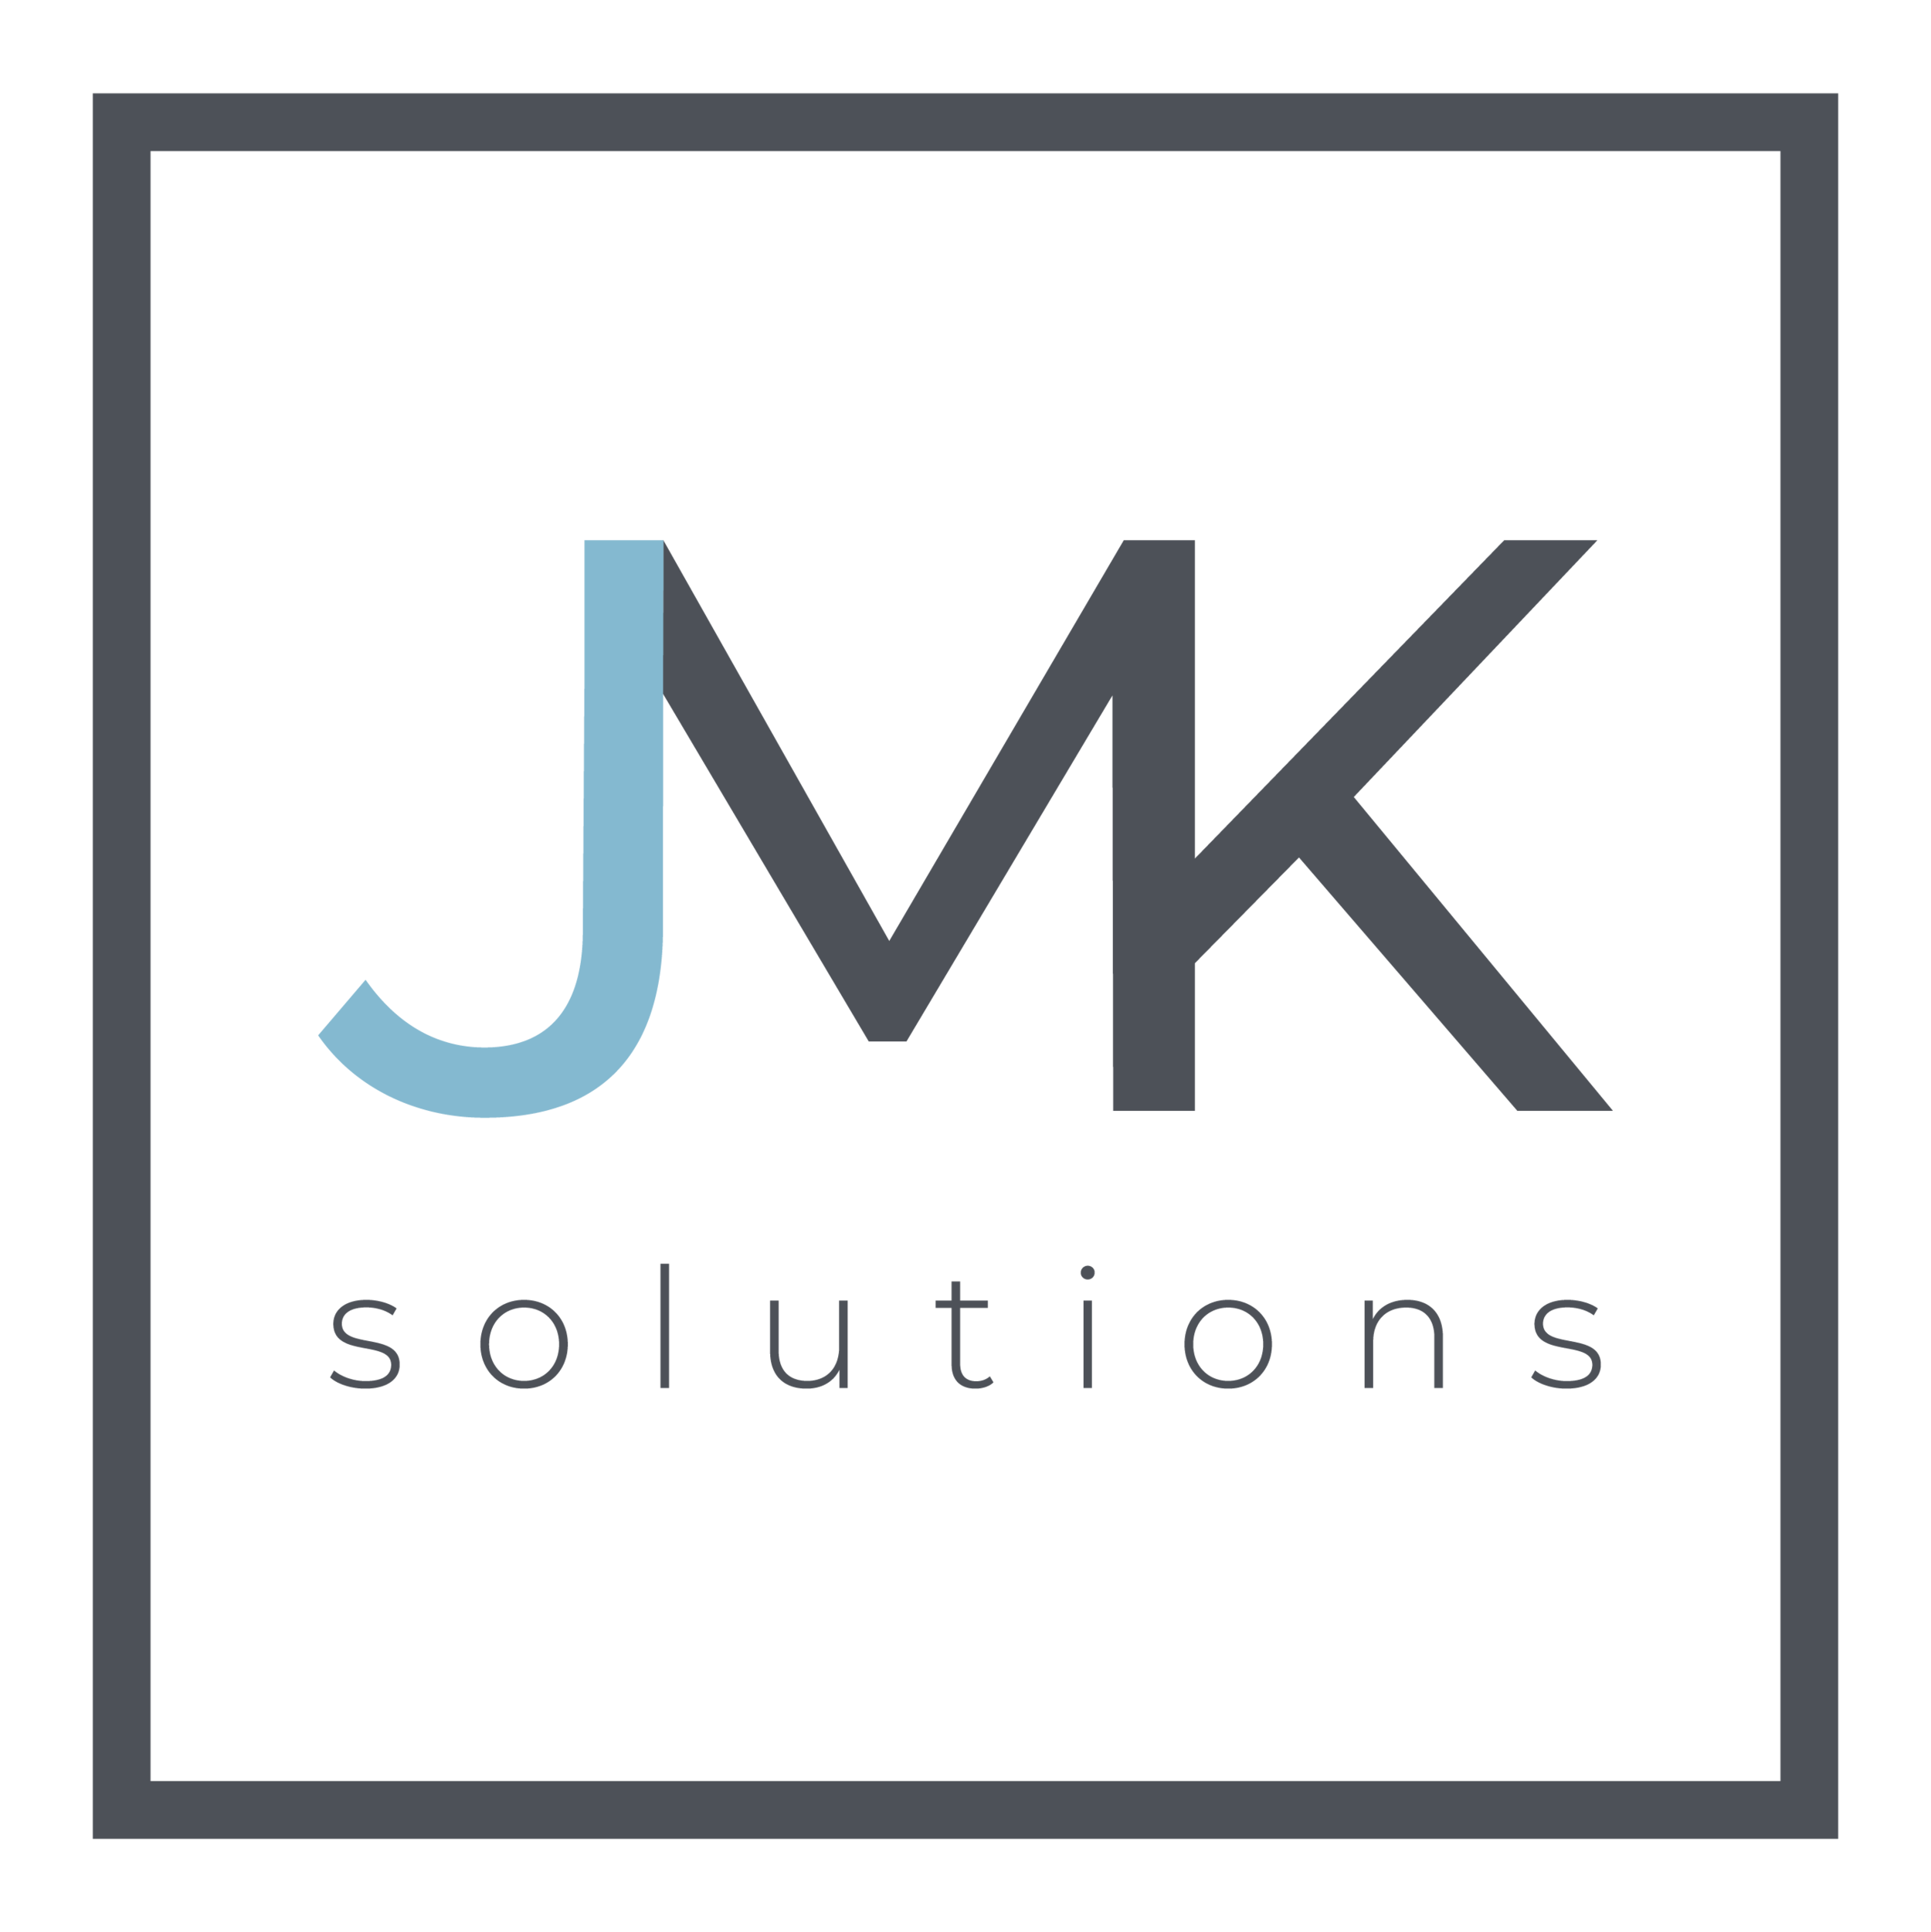 JMK Solutions